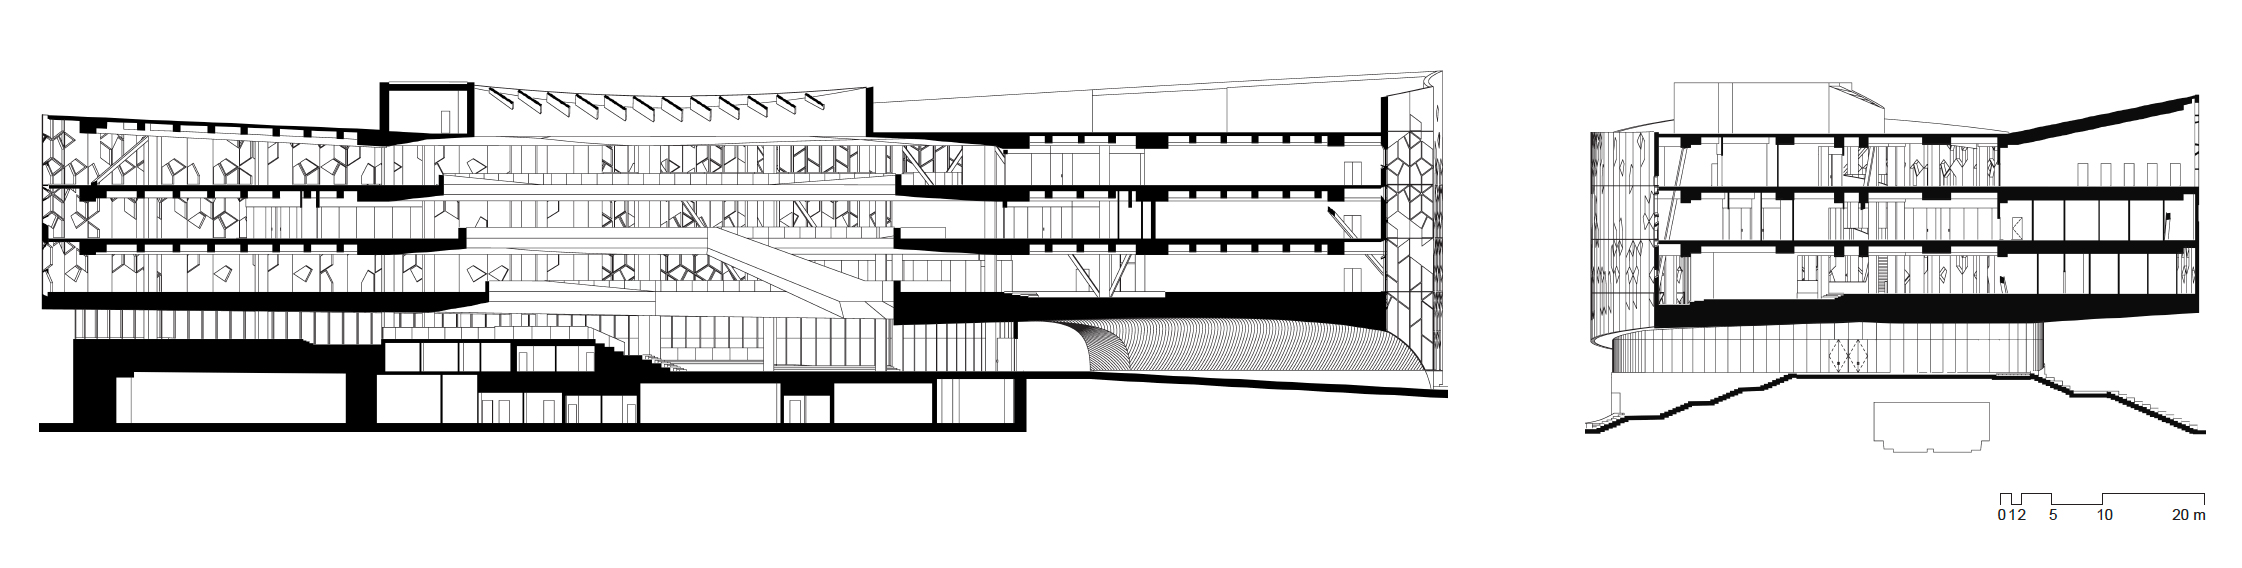 Biblioteca Central De Calgary En Proyecto Snøhetta Arquitectura Viva 7690